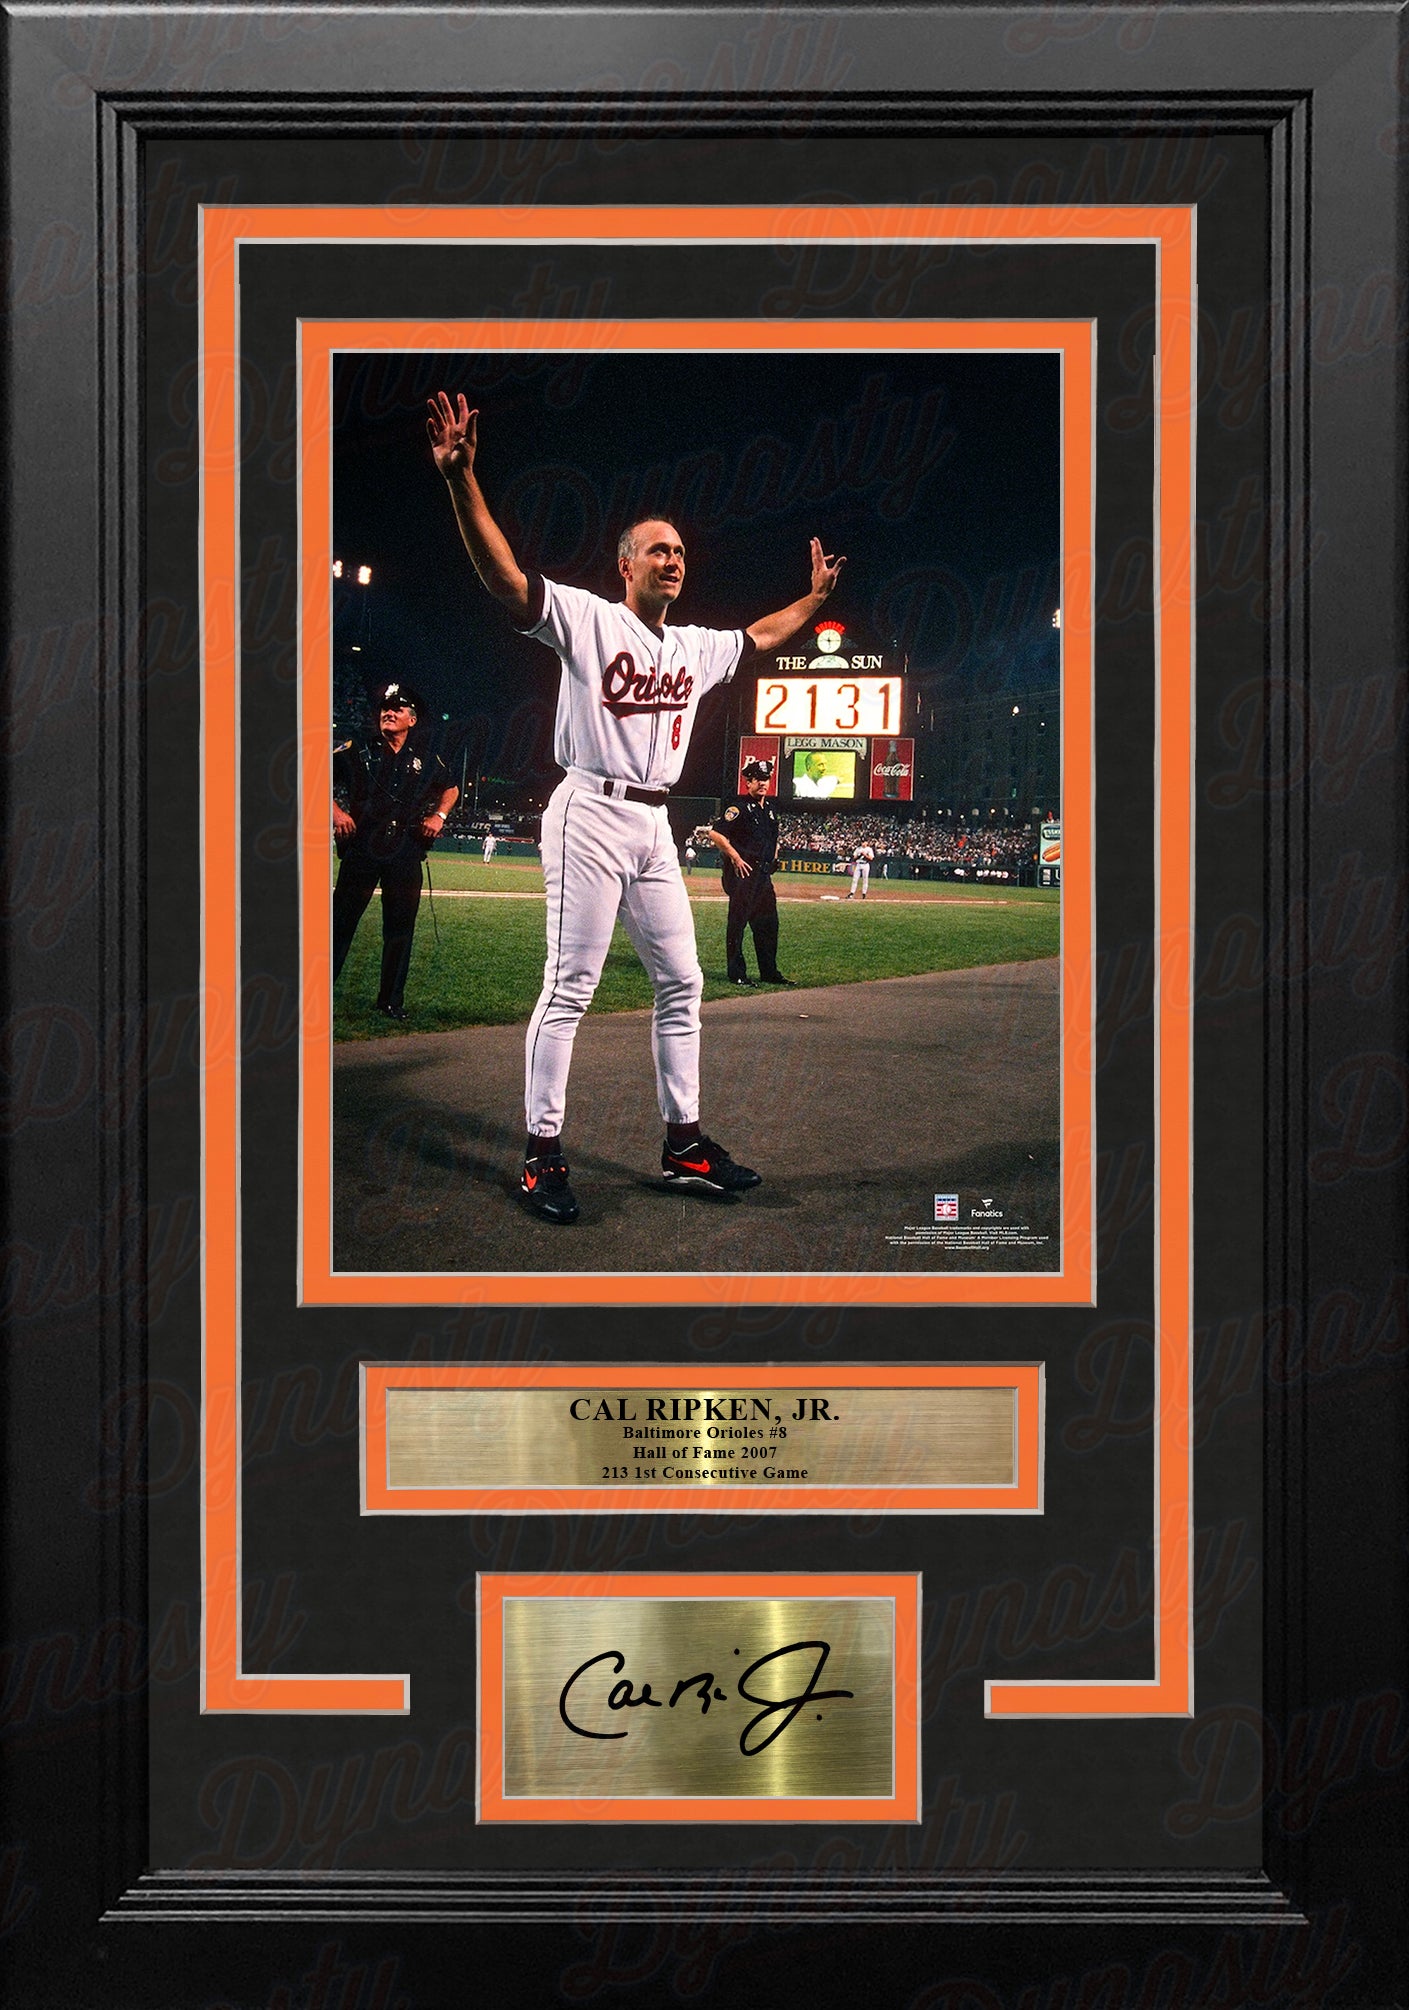 Cal Ripken, Jr. Baltimore Orioles 2131st Game 8" x 10" Framed Baseball Photo with Engraved Autograph - Dynasty Sports & Framing 